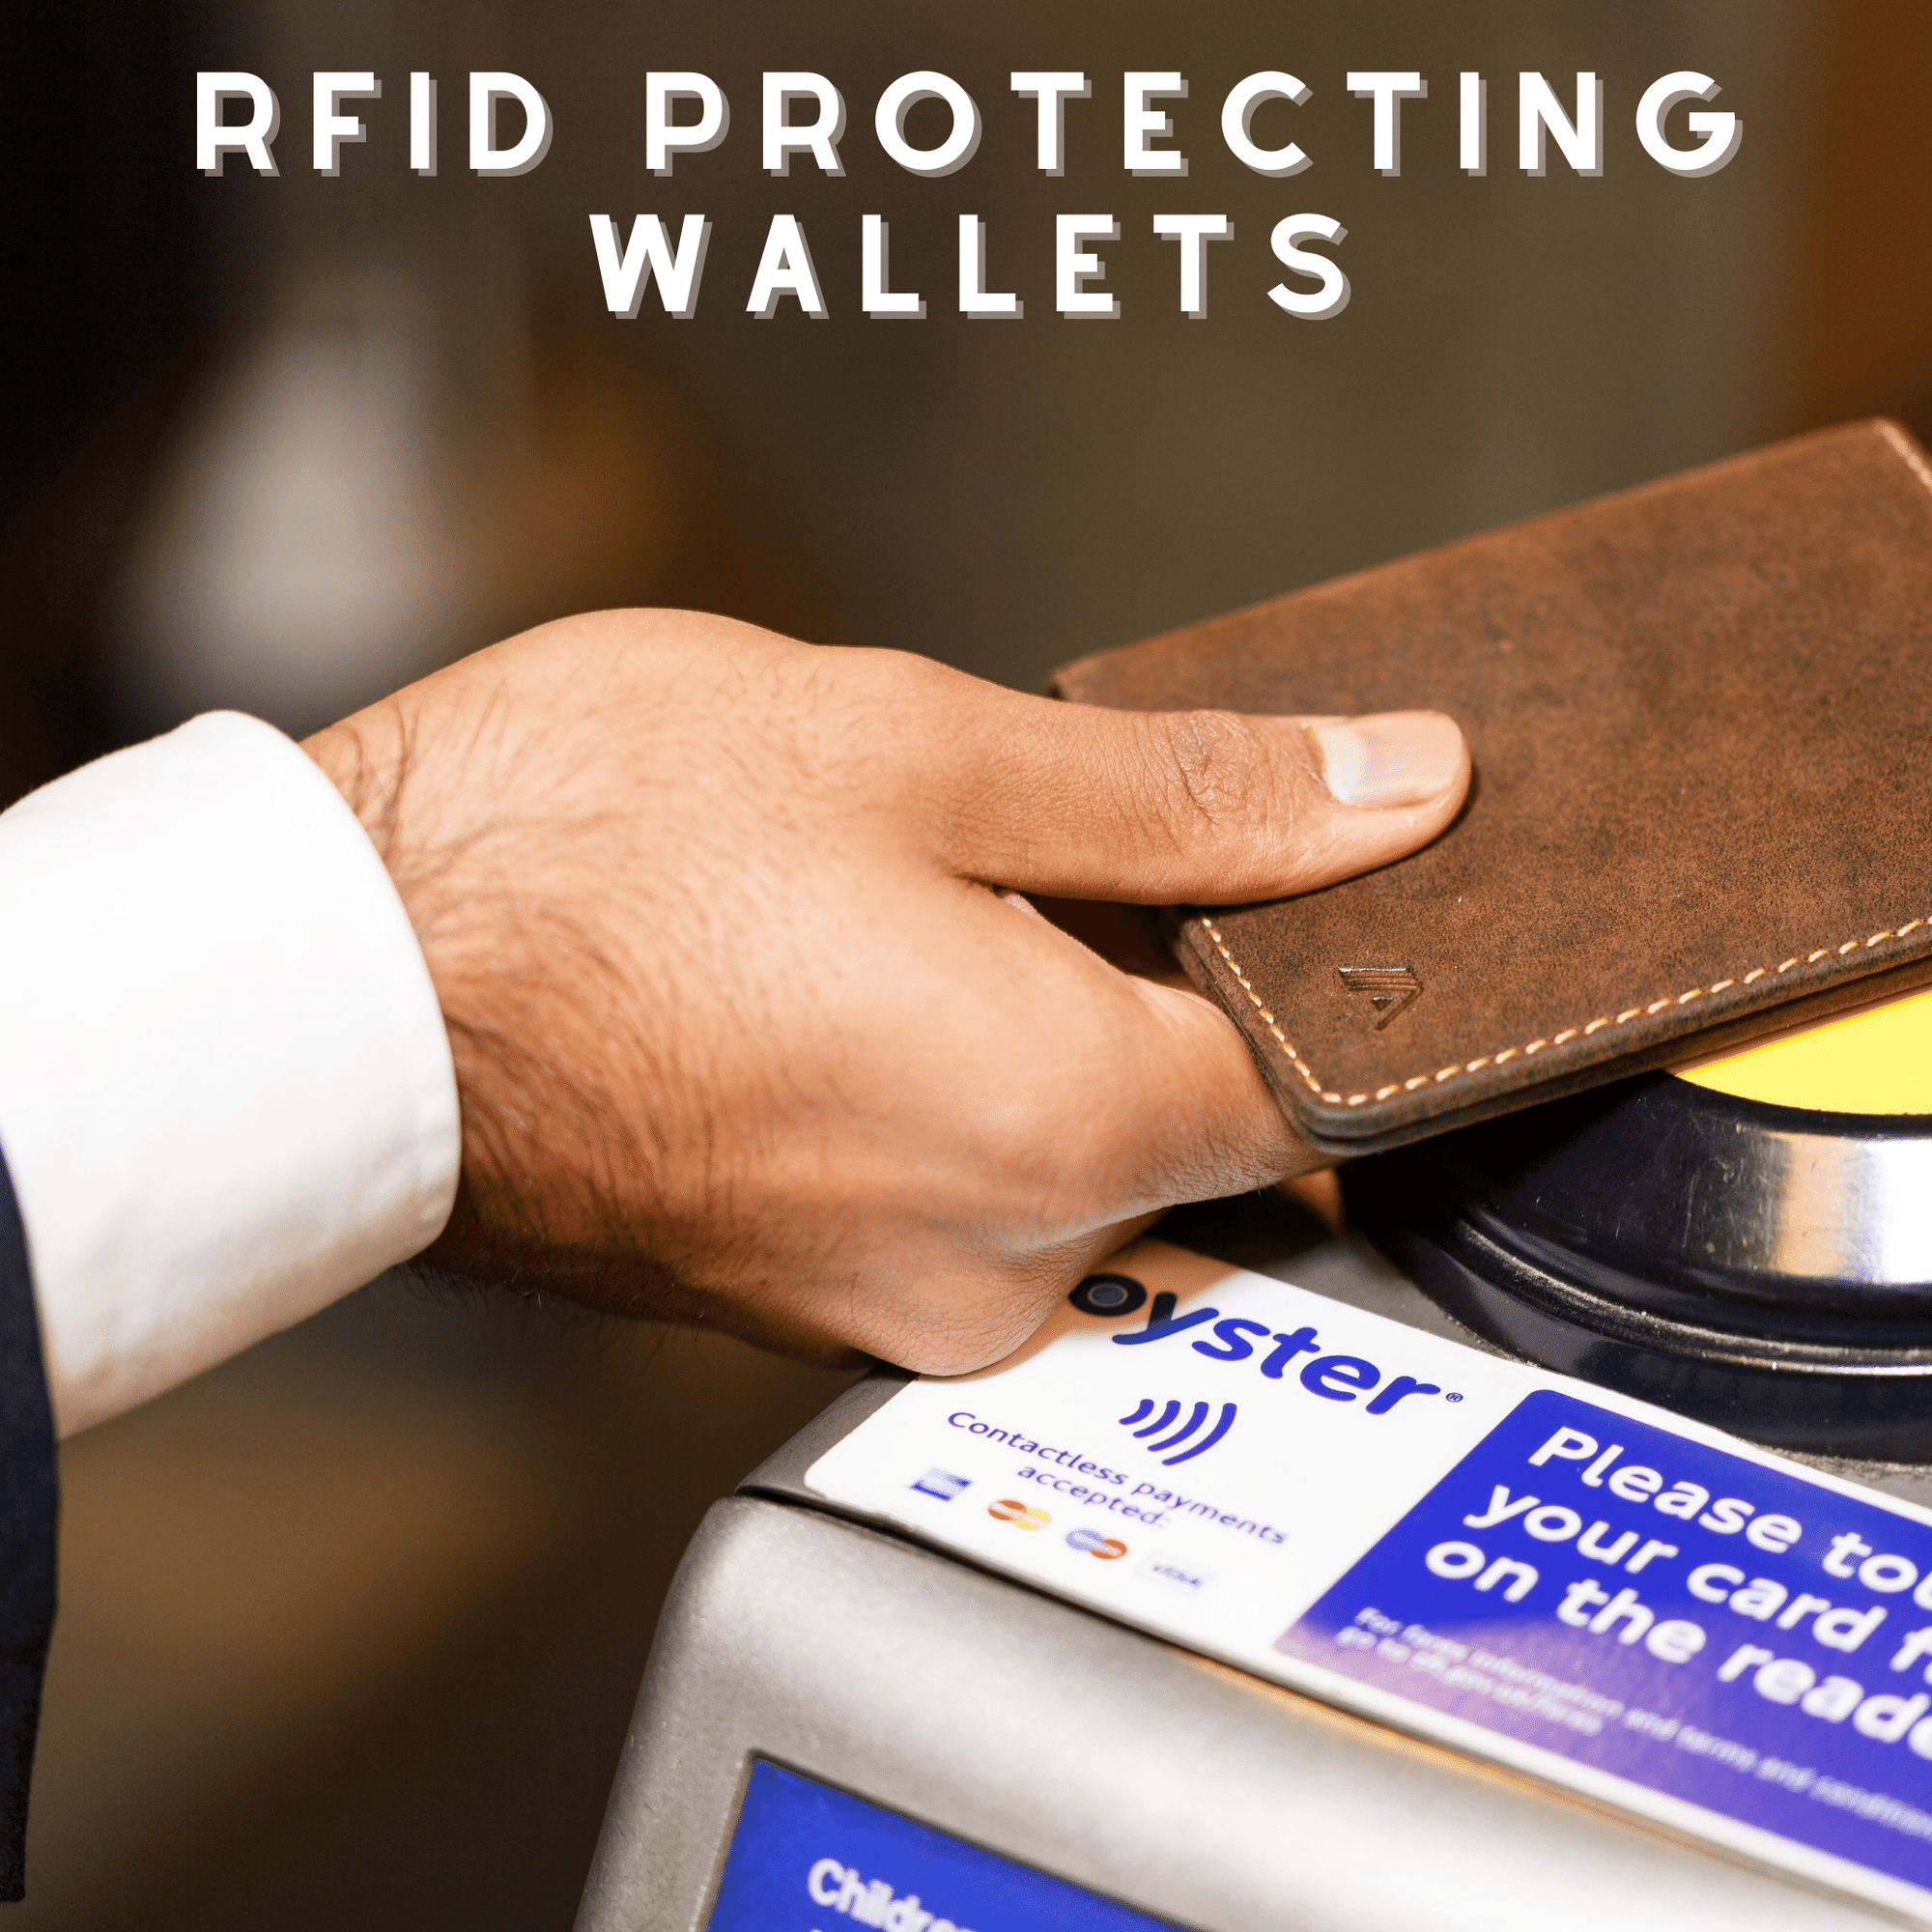 RFID Protecting Wallets